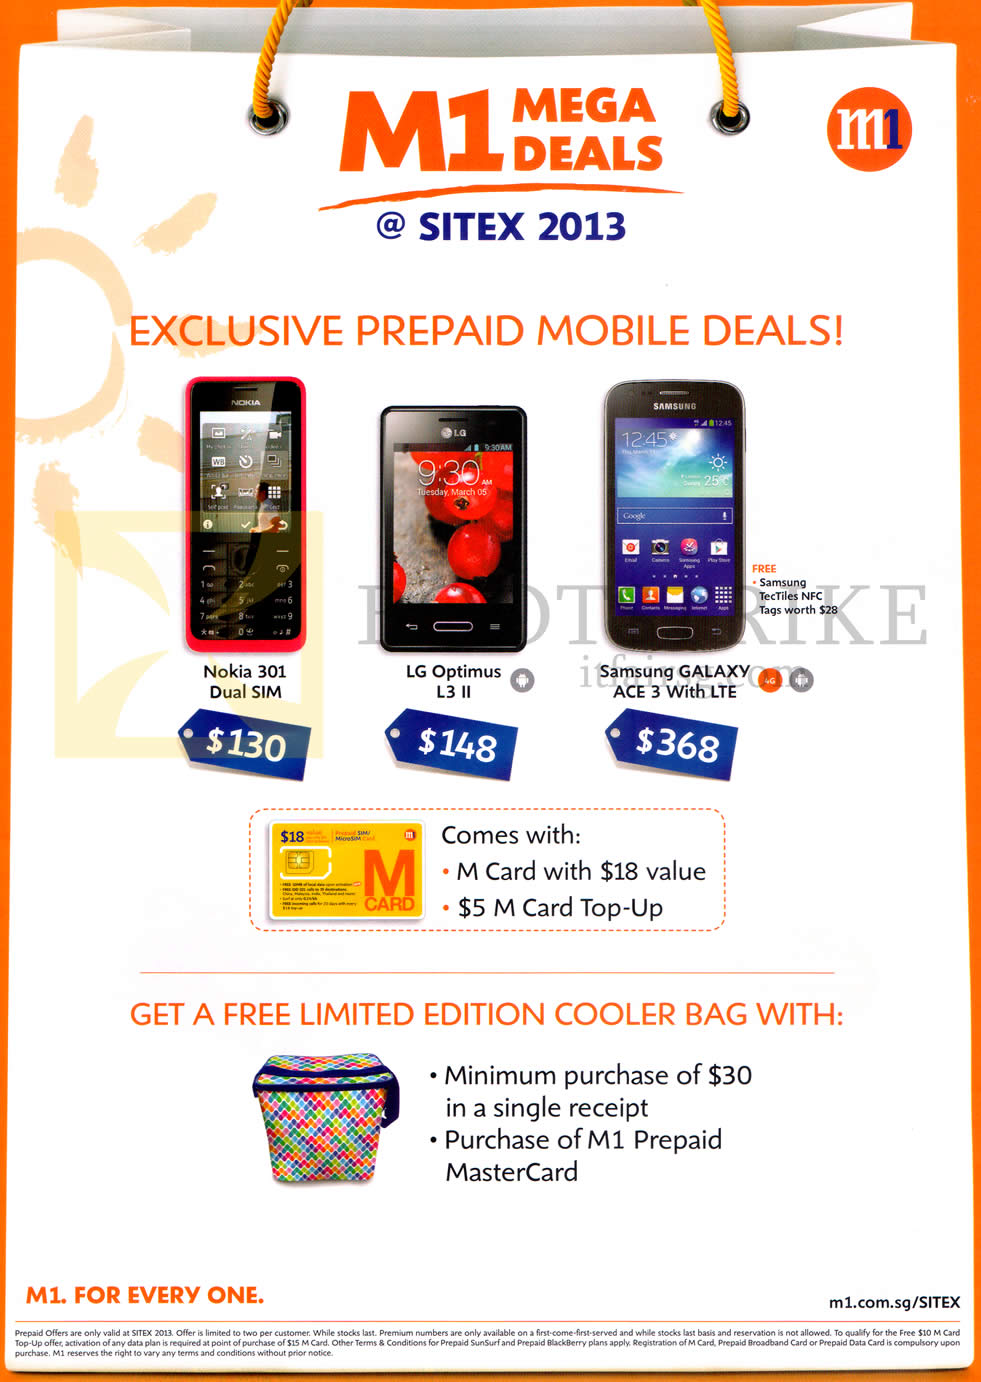 SITEX 2013 price list image brochure of M1 Mobile Prepaid M Card Nokia 301, LG Optimus L3 II, Samsung Galaxy Ace 3, Free Cooler Bag